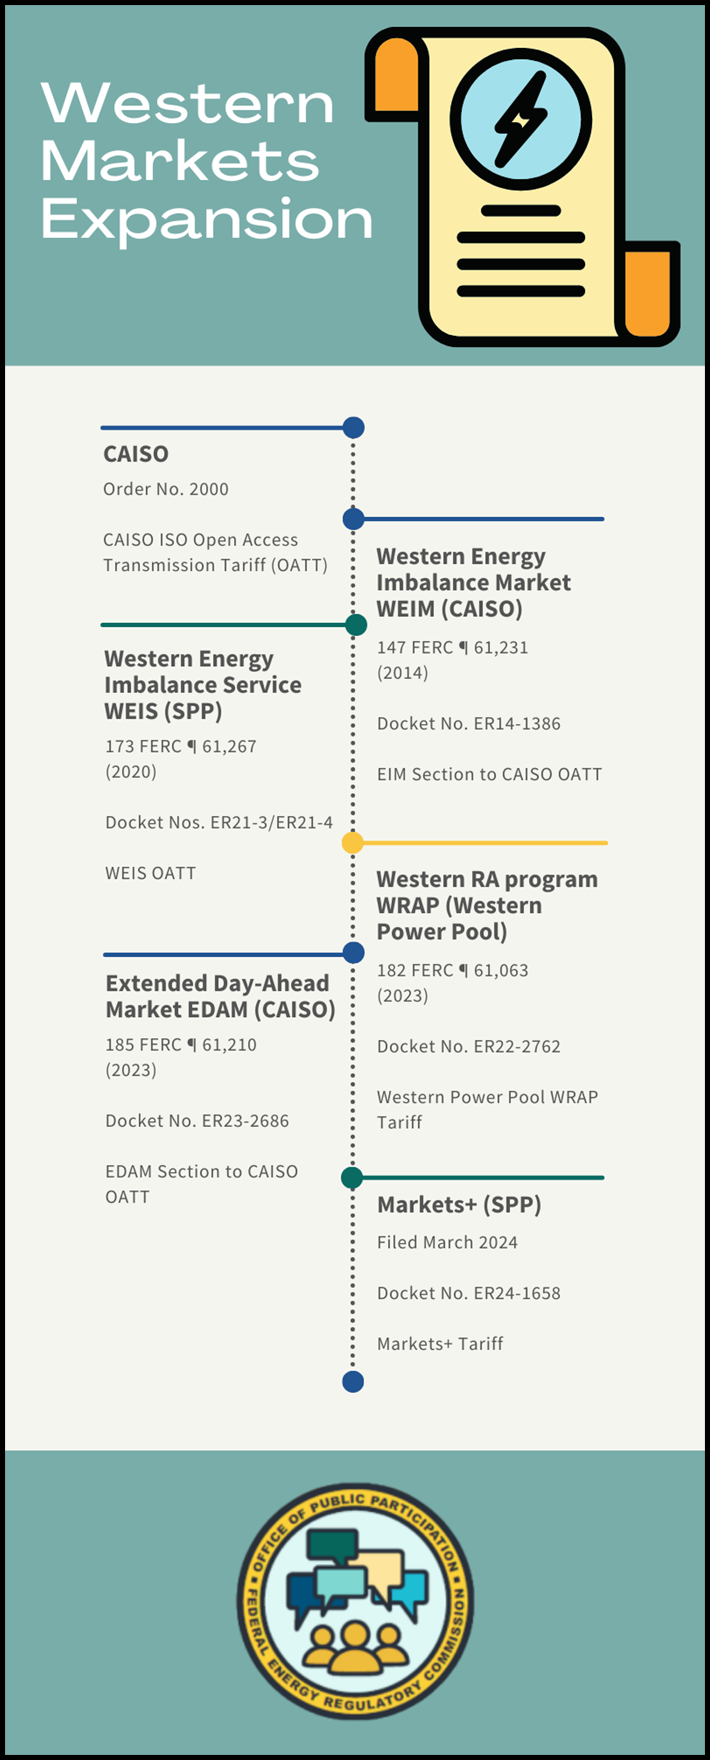 Western Energy Imbalance Service (WEIS) (SPP): 173 FERC ¶ 61,267 (2020), with Docket Nos. ER21-3/ER21-4 and WEIS OATT. Western Energy Imbalance Market WEIM (CAISO): 147 FERC ¶ 61,231 (2014), with Docket No. ER14-1386, and EIM Section to CAISO OATT. Extended Day-Ahead Market (EDAM) (CAISO): 185 FERC ¶ 61,210 (2023), with Docket No. ER22-2686 and EDAM Section to CAISO OATT. Western RA program (WRAP) (Western Power Pool): 182 FERC ¶ 61,063 (2023), with Docket No. ER22-2762 and Western Power Pool WRAP Tariff. M